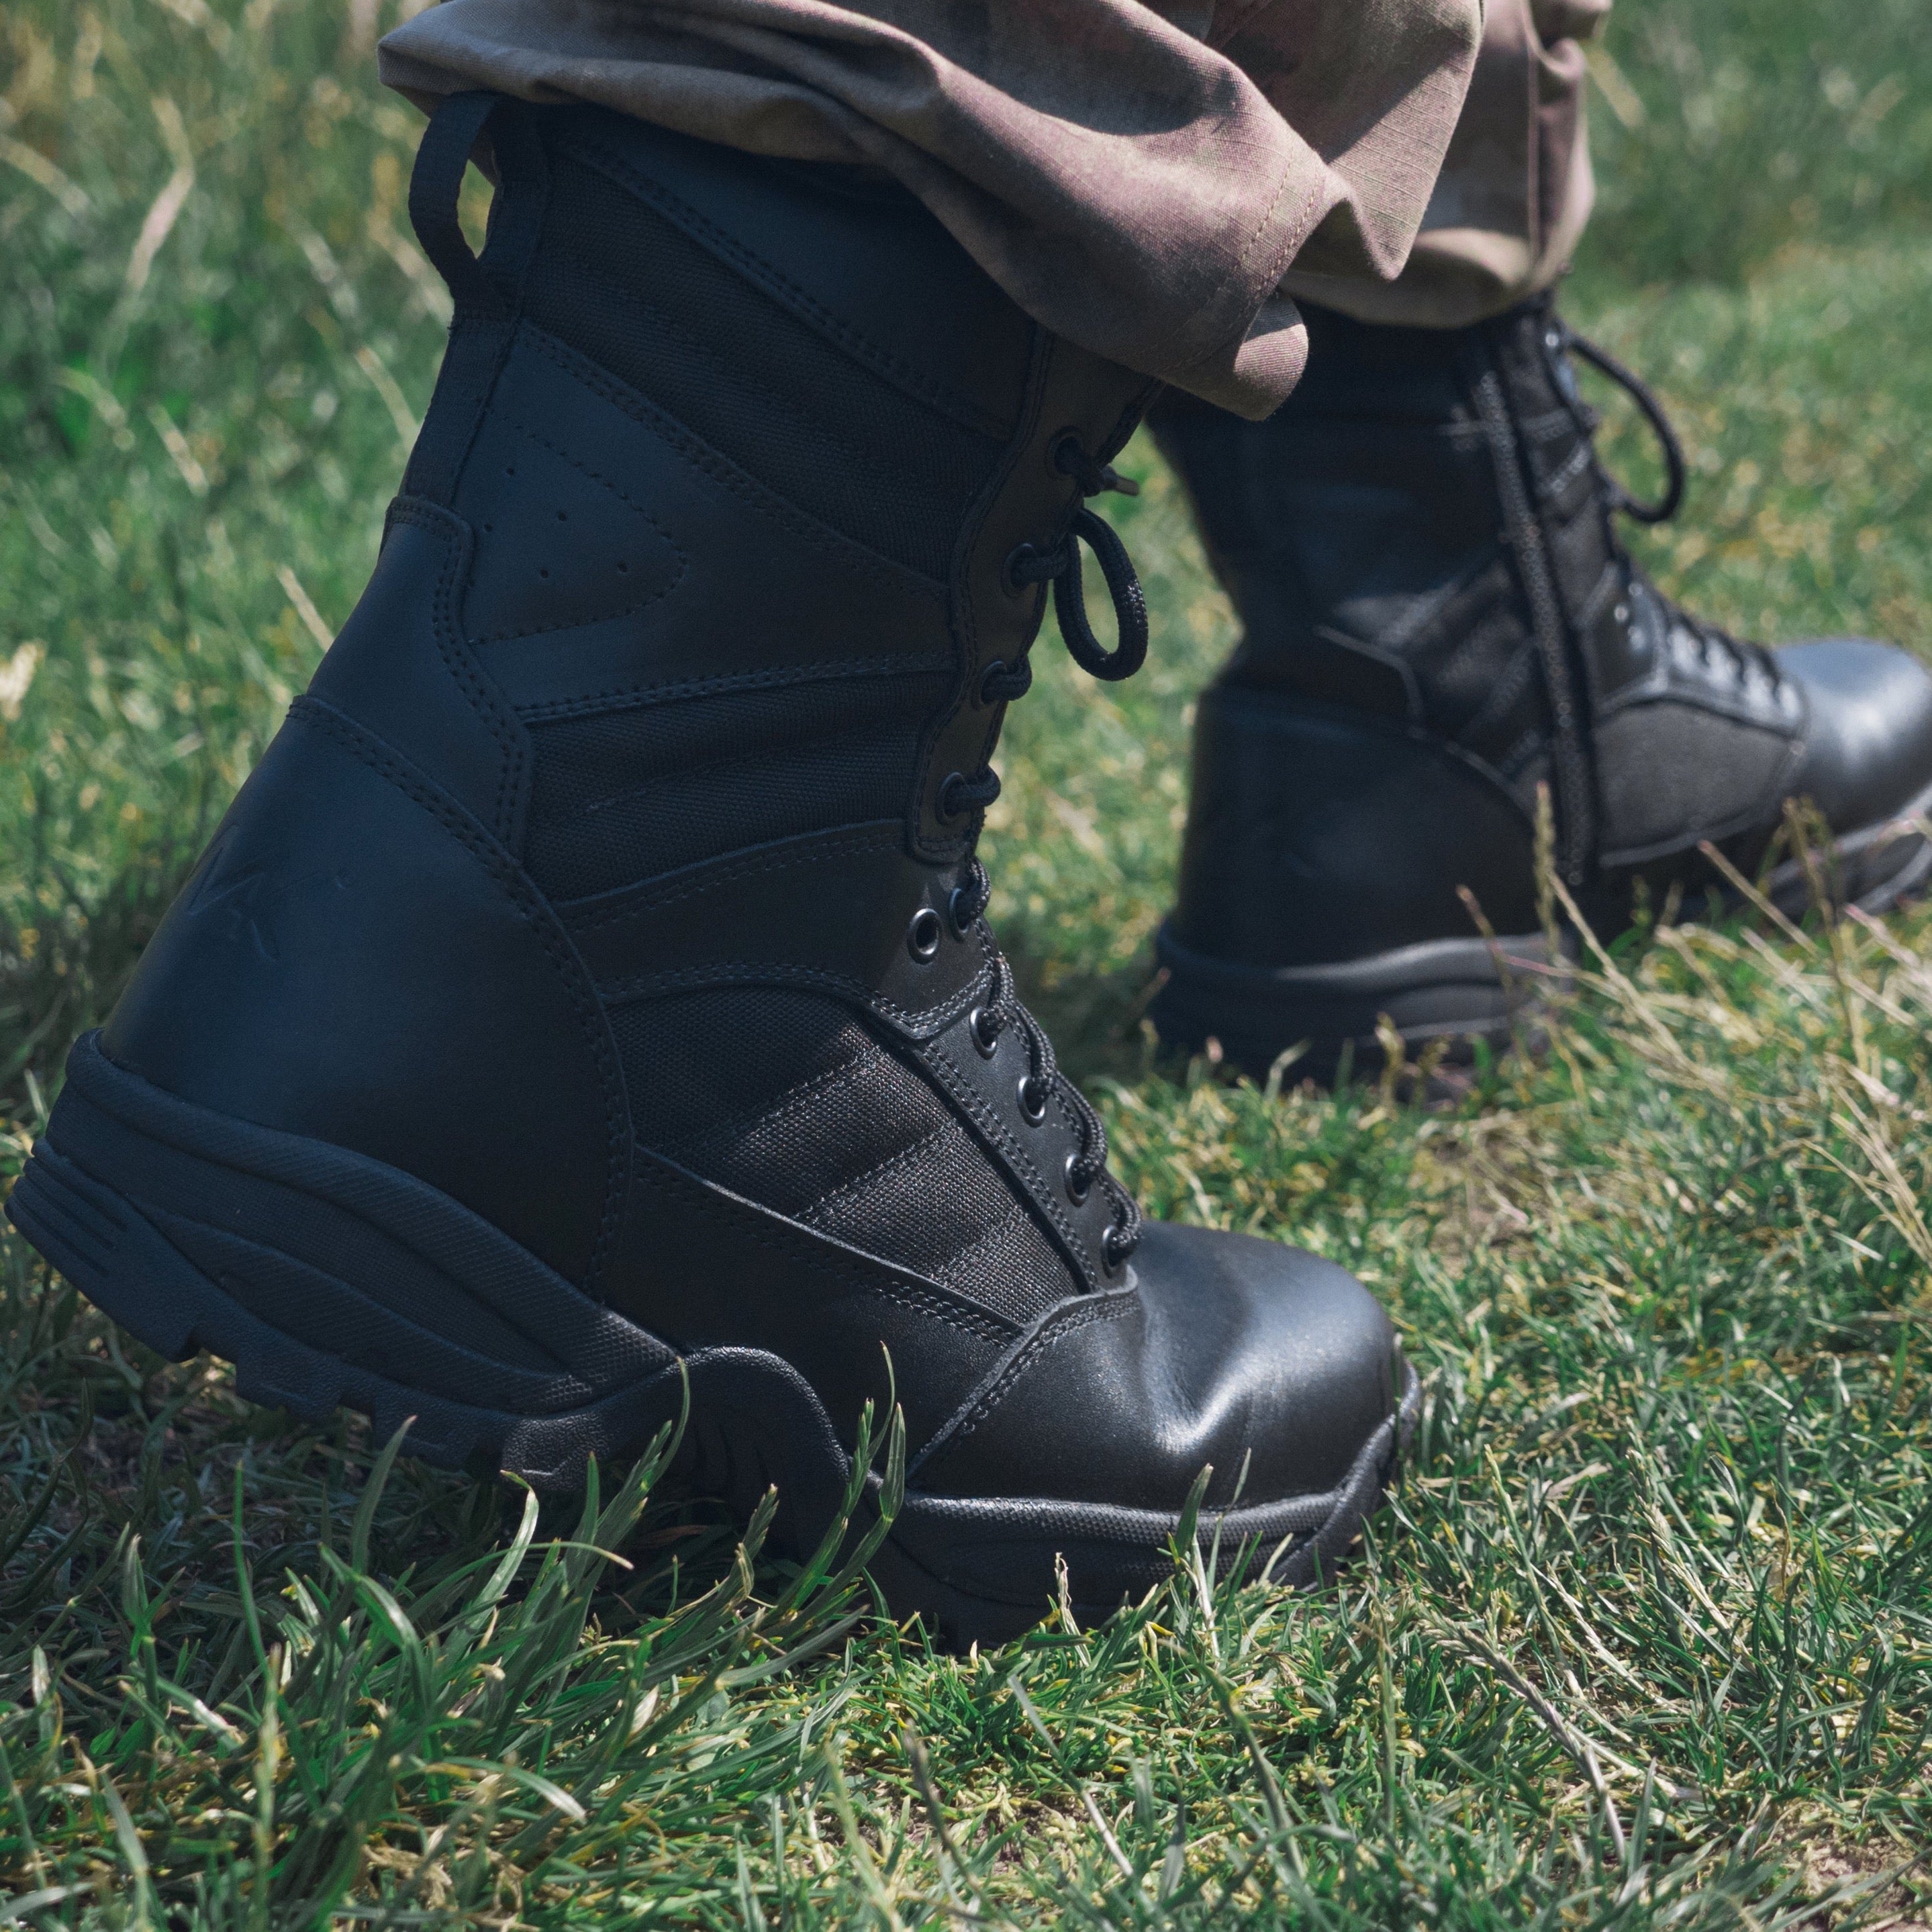 protector 9" combat boot walking in grass